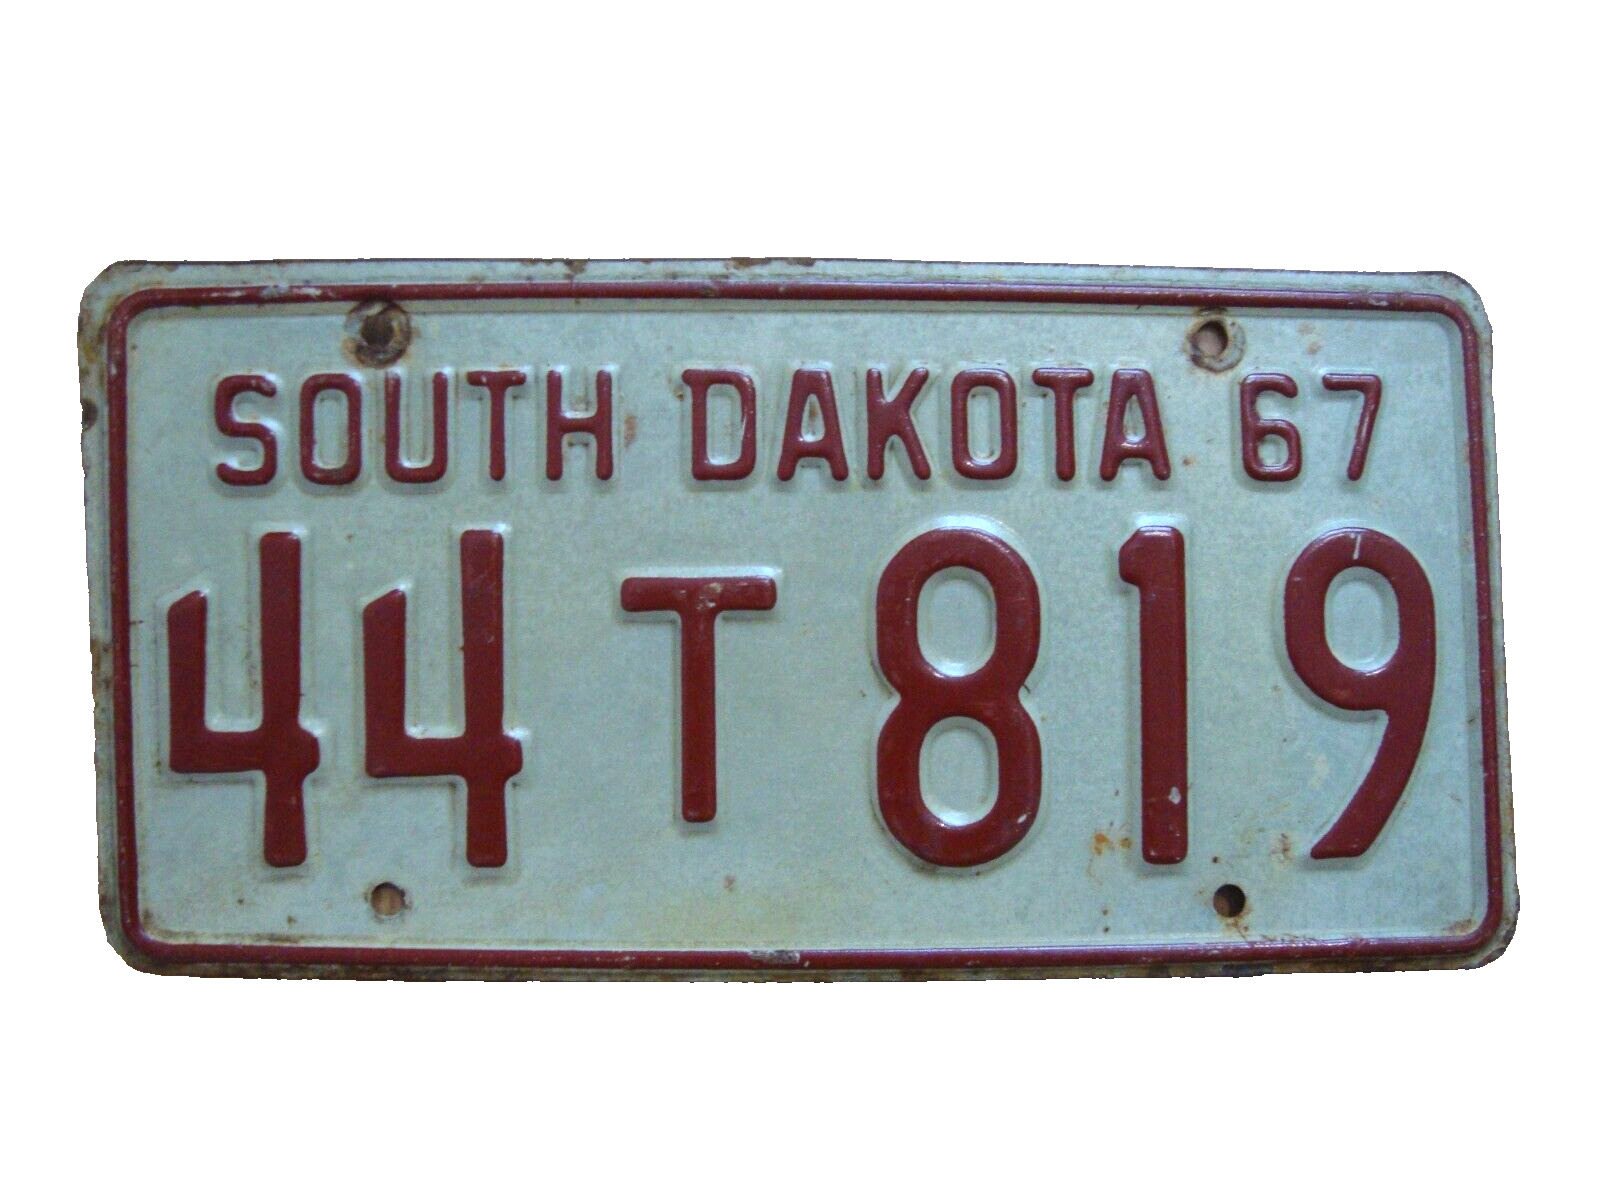 1967 South Dakota Truck License plate in original condition 44T 819